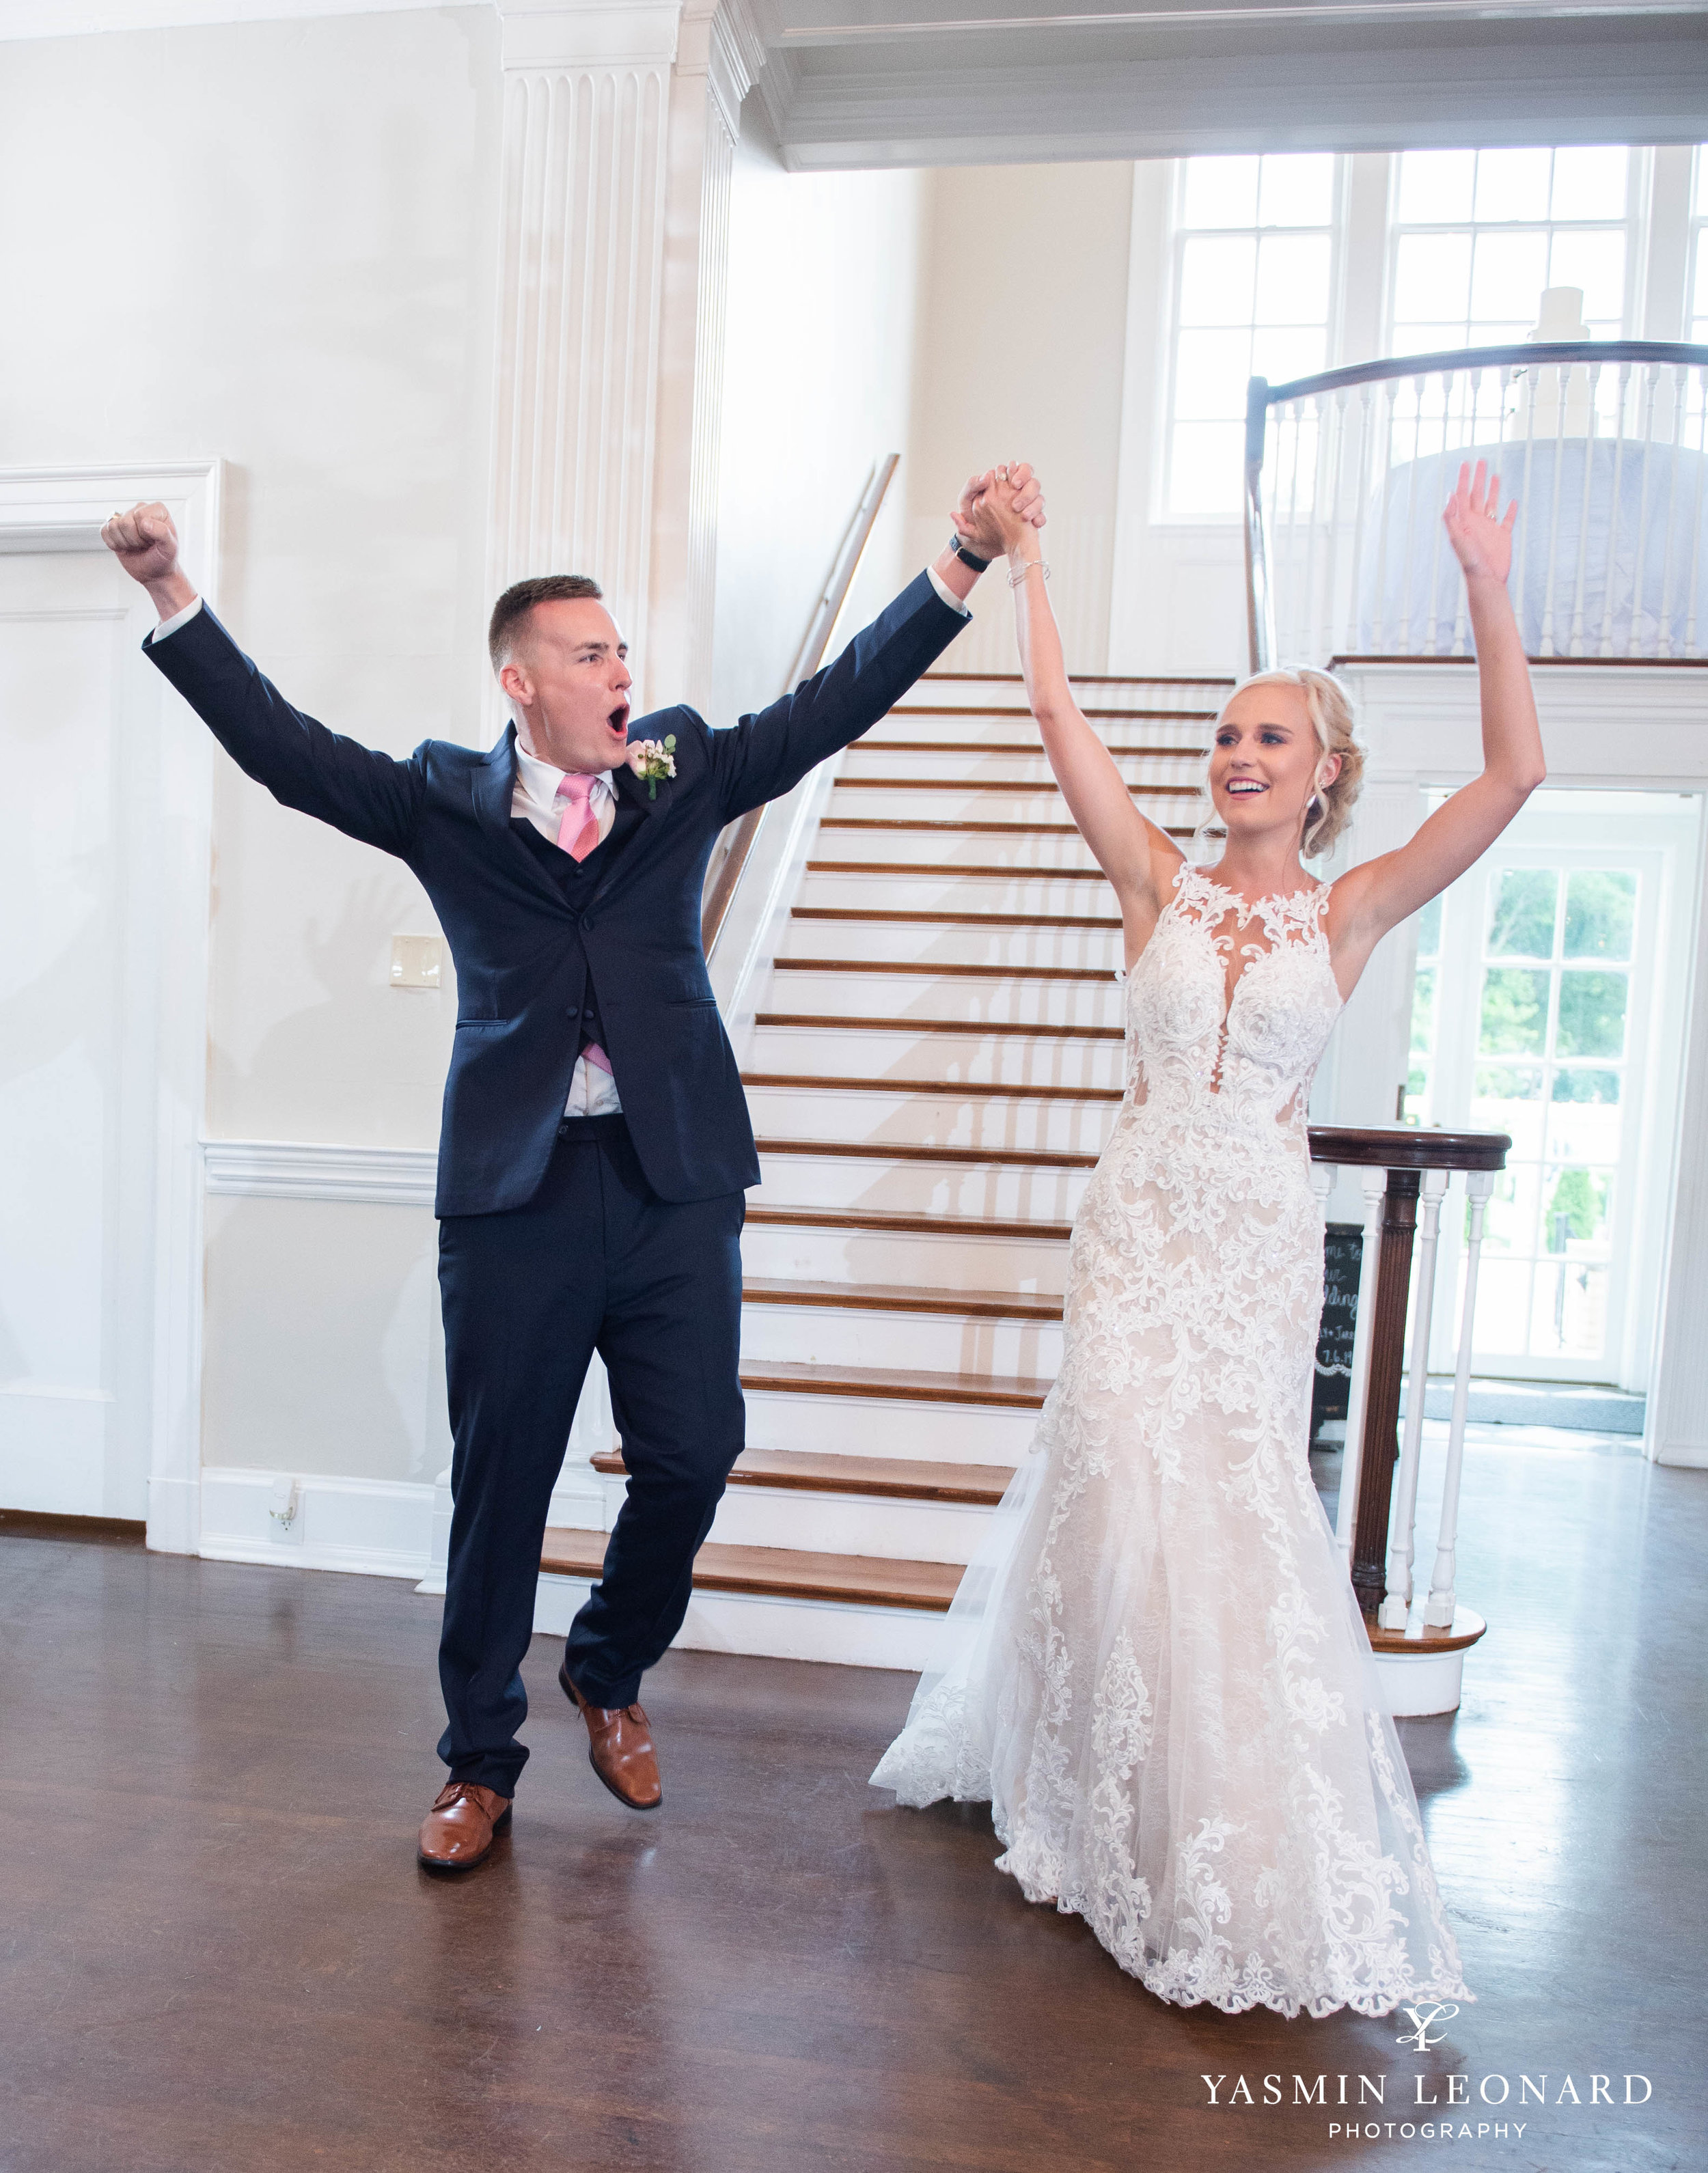 Separk Mansion - NC Weddings - Gastonia Wedding - NC Wedding Venues - Pink and Blue Wedding Ideas - Pink Bridesmaid Dresses - Yasmin Leonard Photography-45.jpg